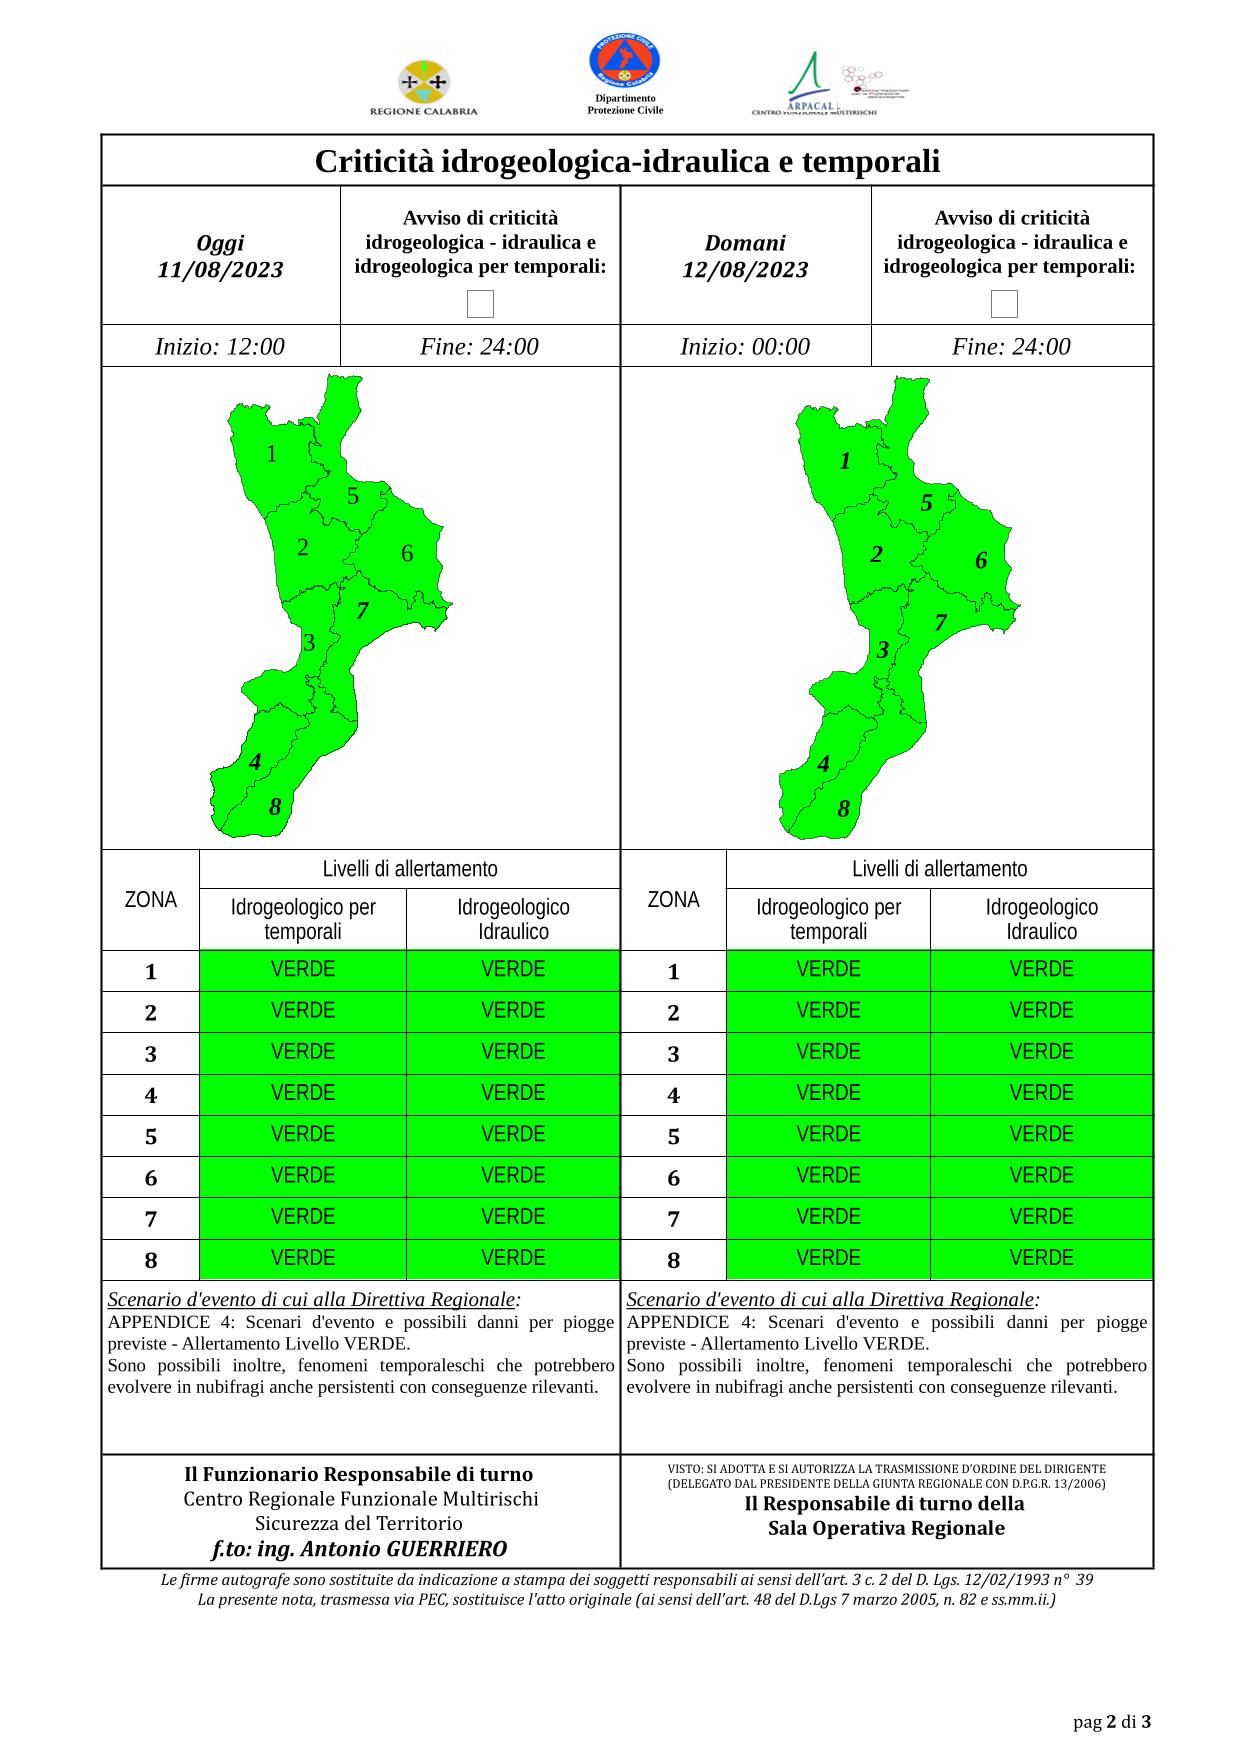 Criticità idrogeologica-idraulica e temporali in Calabria 11-08-2023